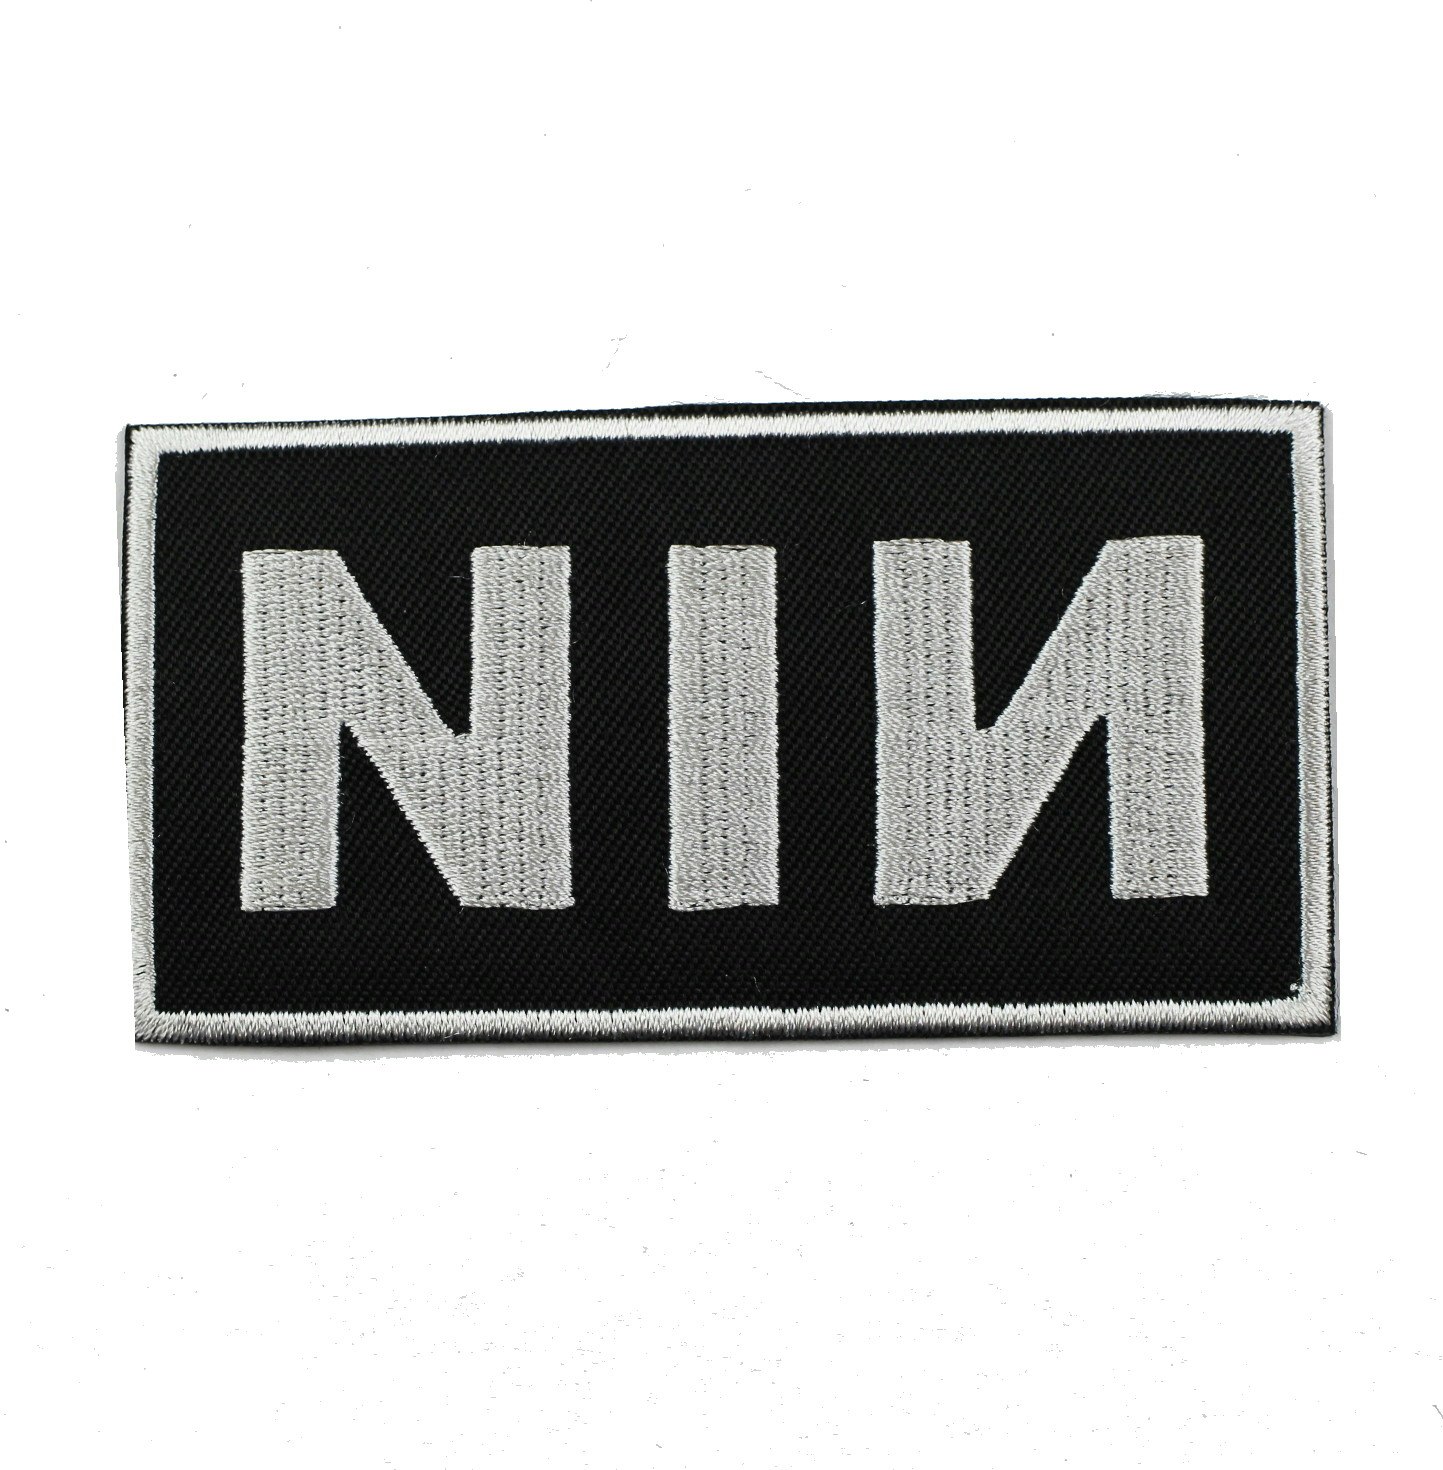 Nine inch nails logo patch